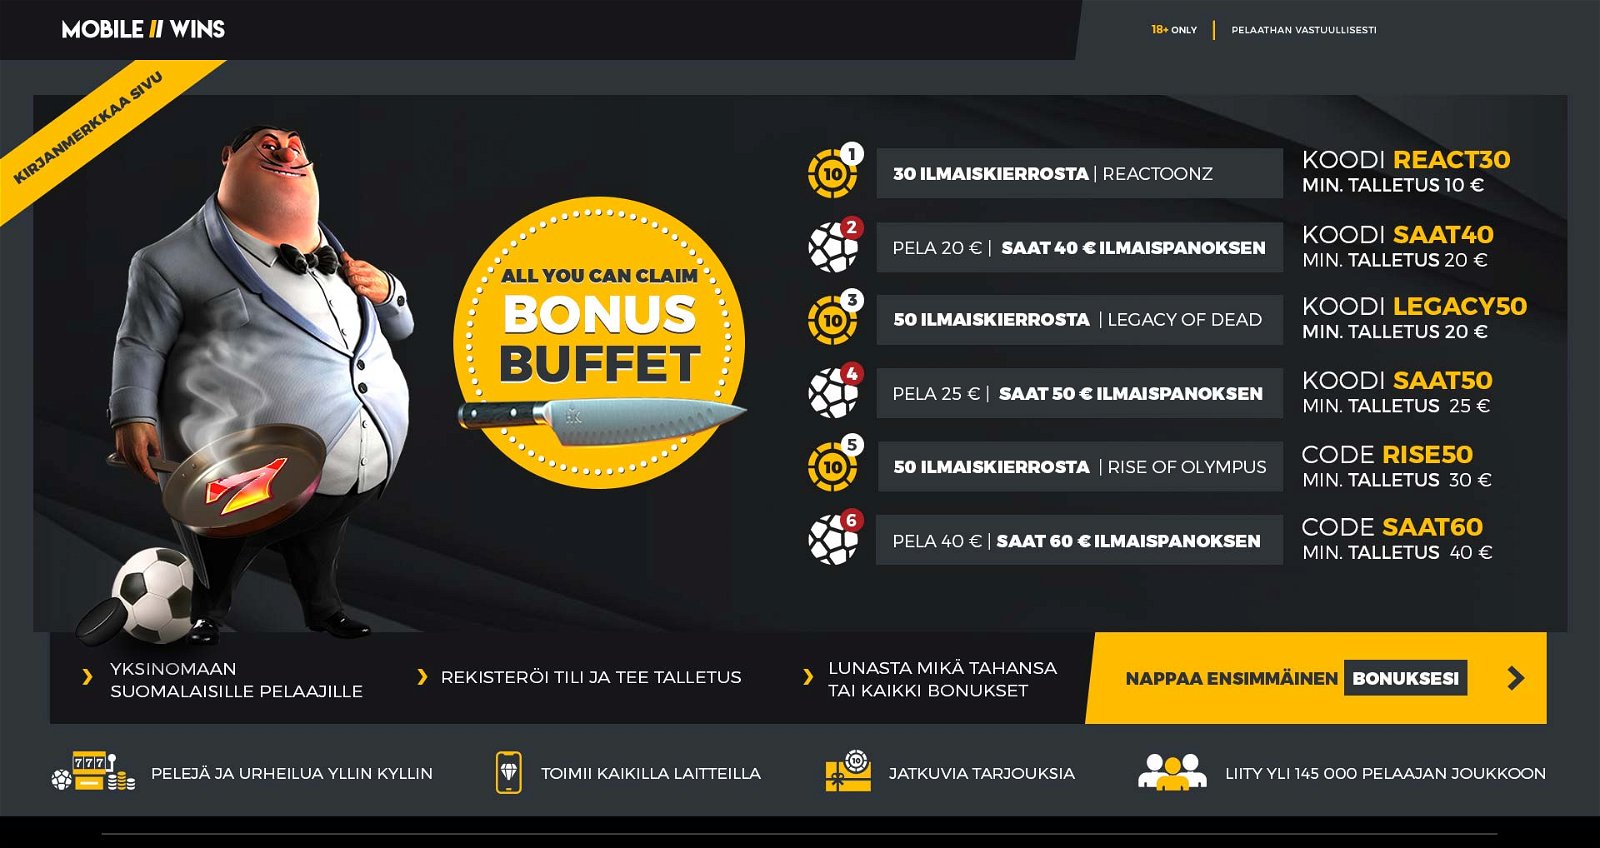 Casino & Sports | NP | Bonus Buffet | FI